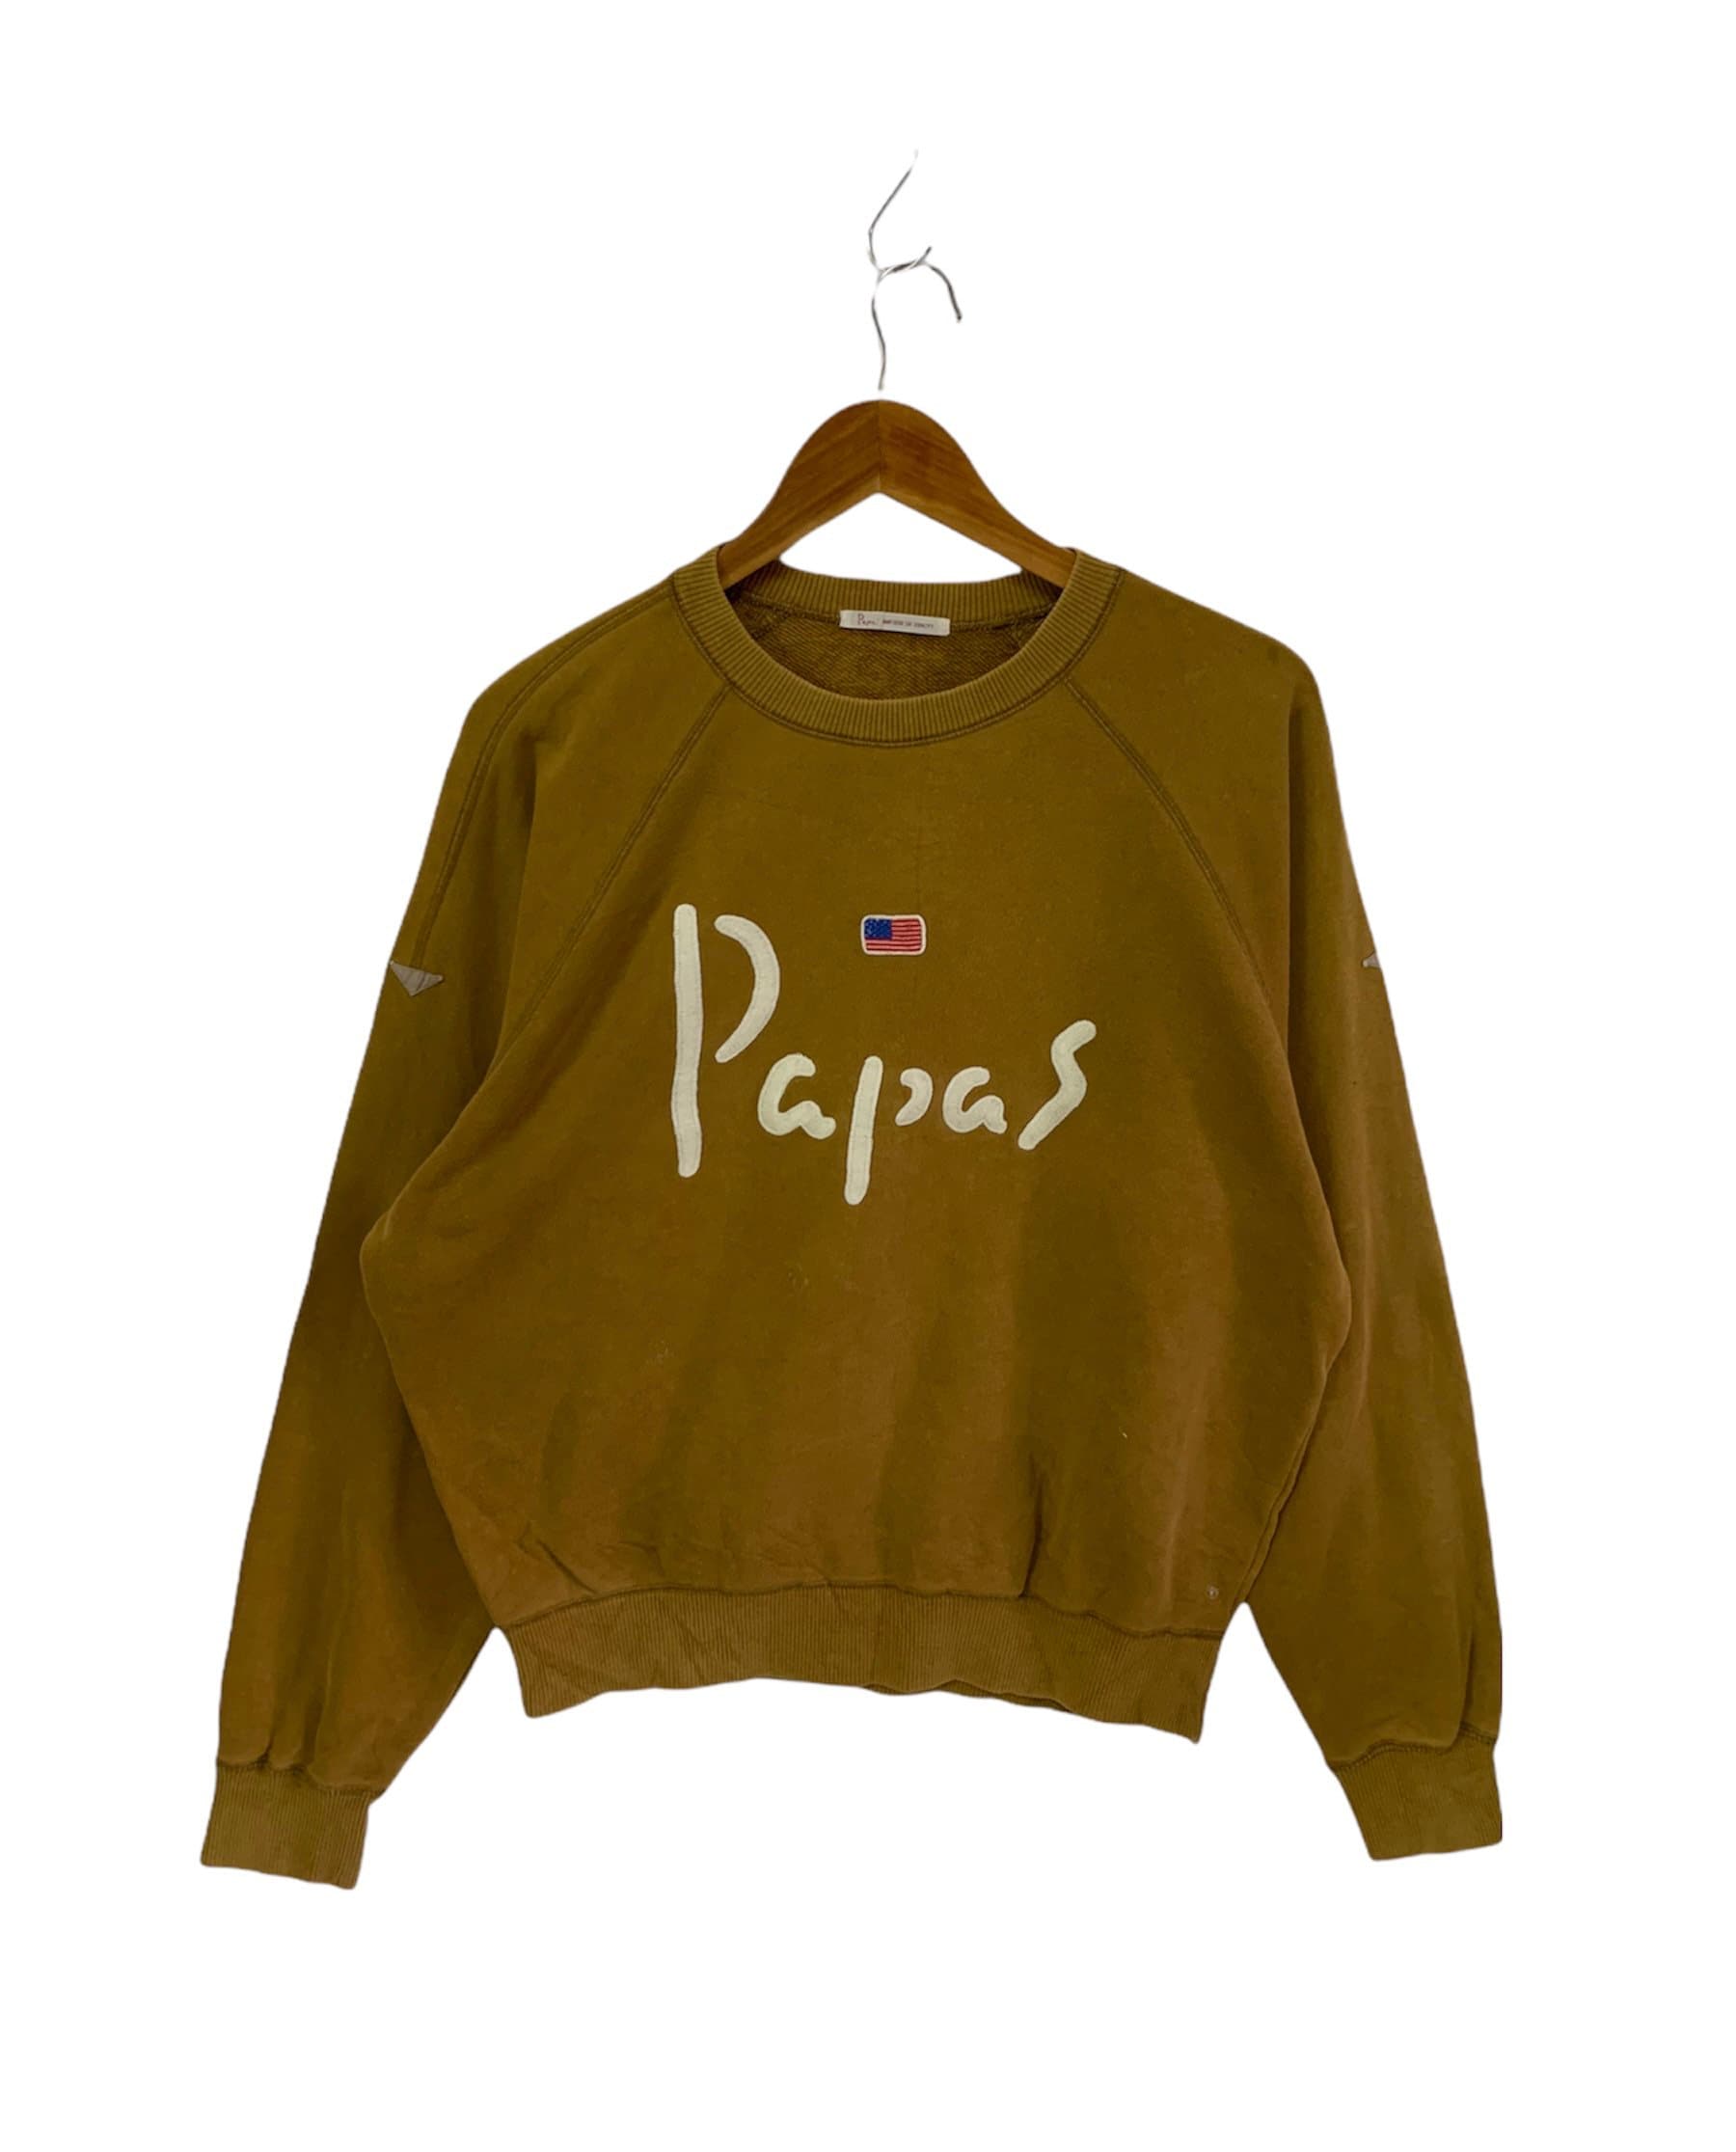 Vintage 90S Papa Sweatshirt Pullover Medium Olive Oliven von FongfongStudio